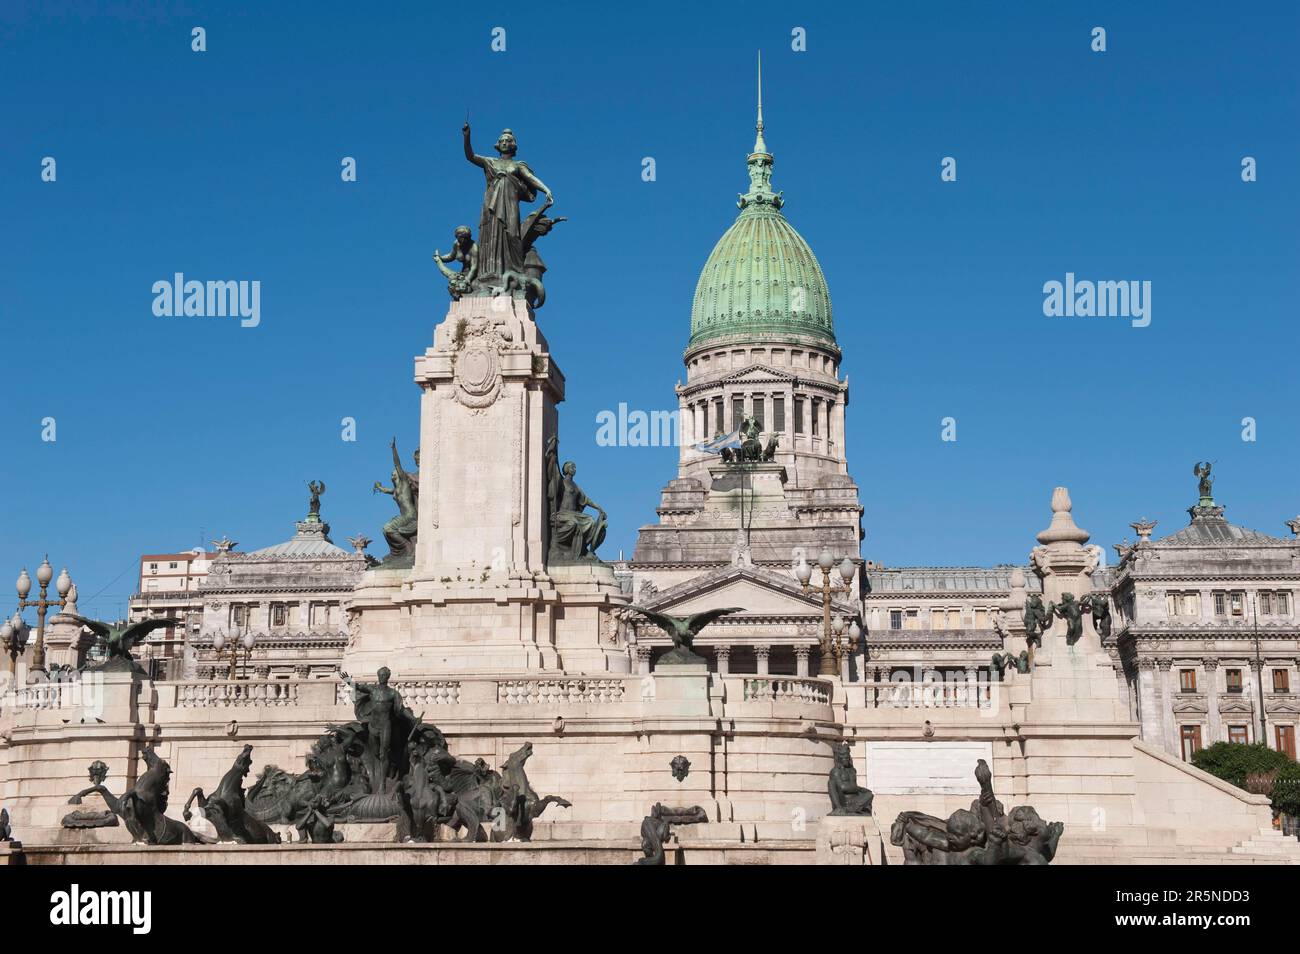 Argentine National Congress and Monumento a los dos Congresos, Plaza del Congreso, Buenos Aires, Argentina Stock Photo